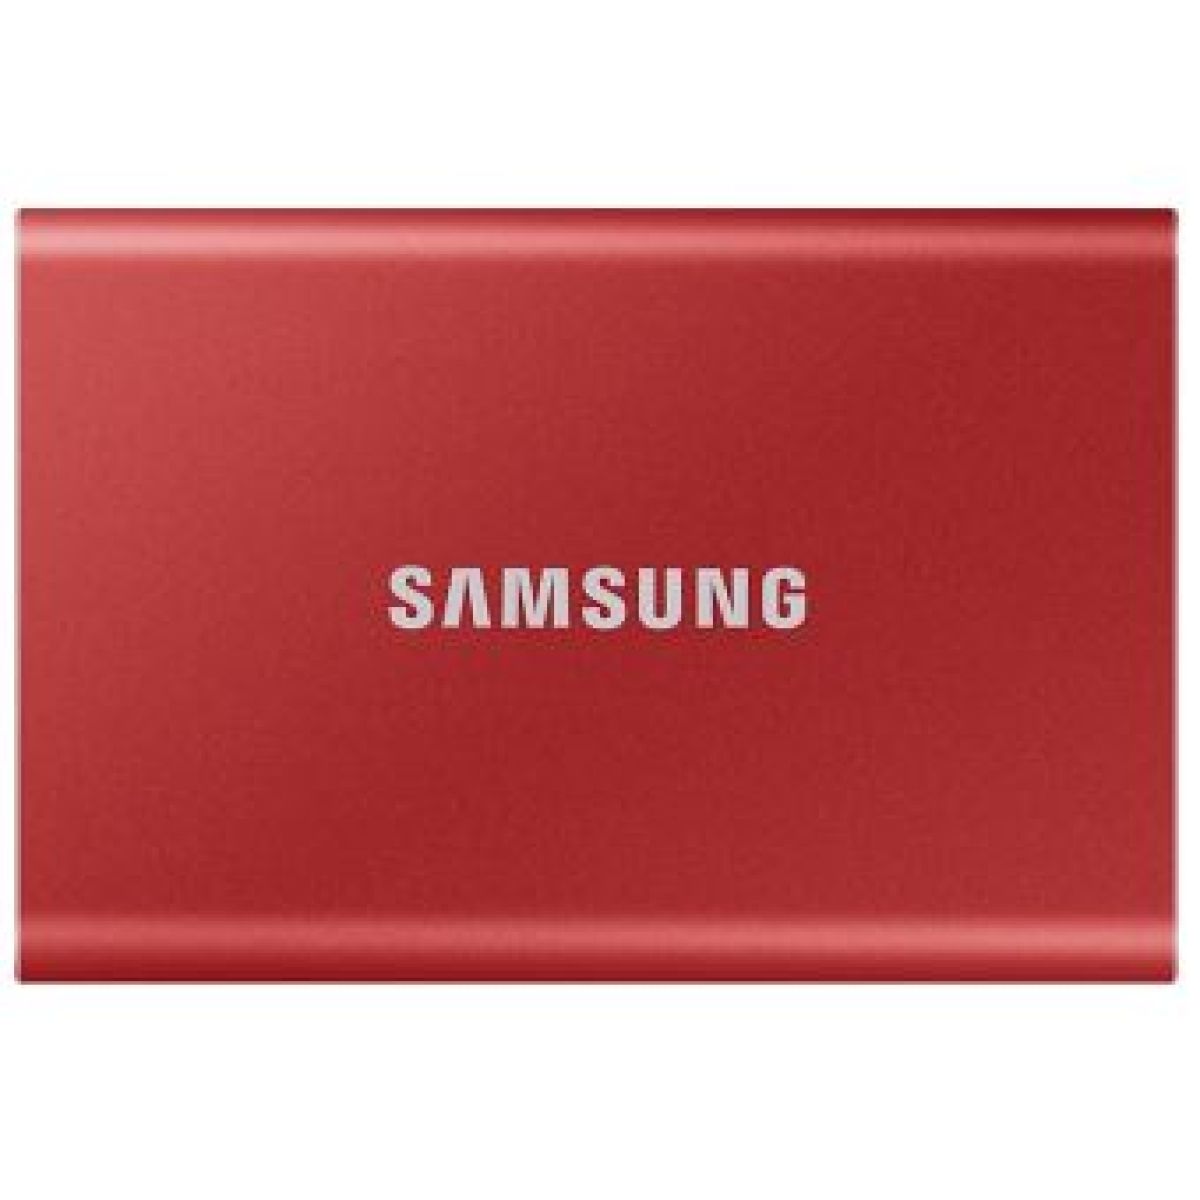 Samsung portable SSD T7 disque dur rouge